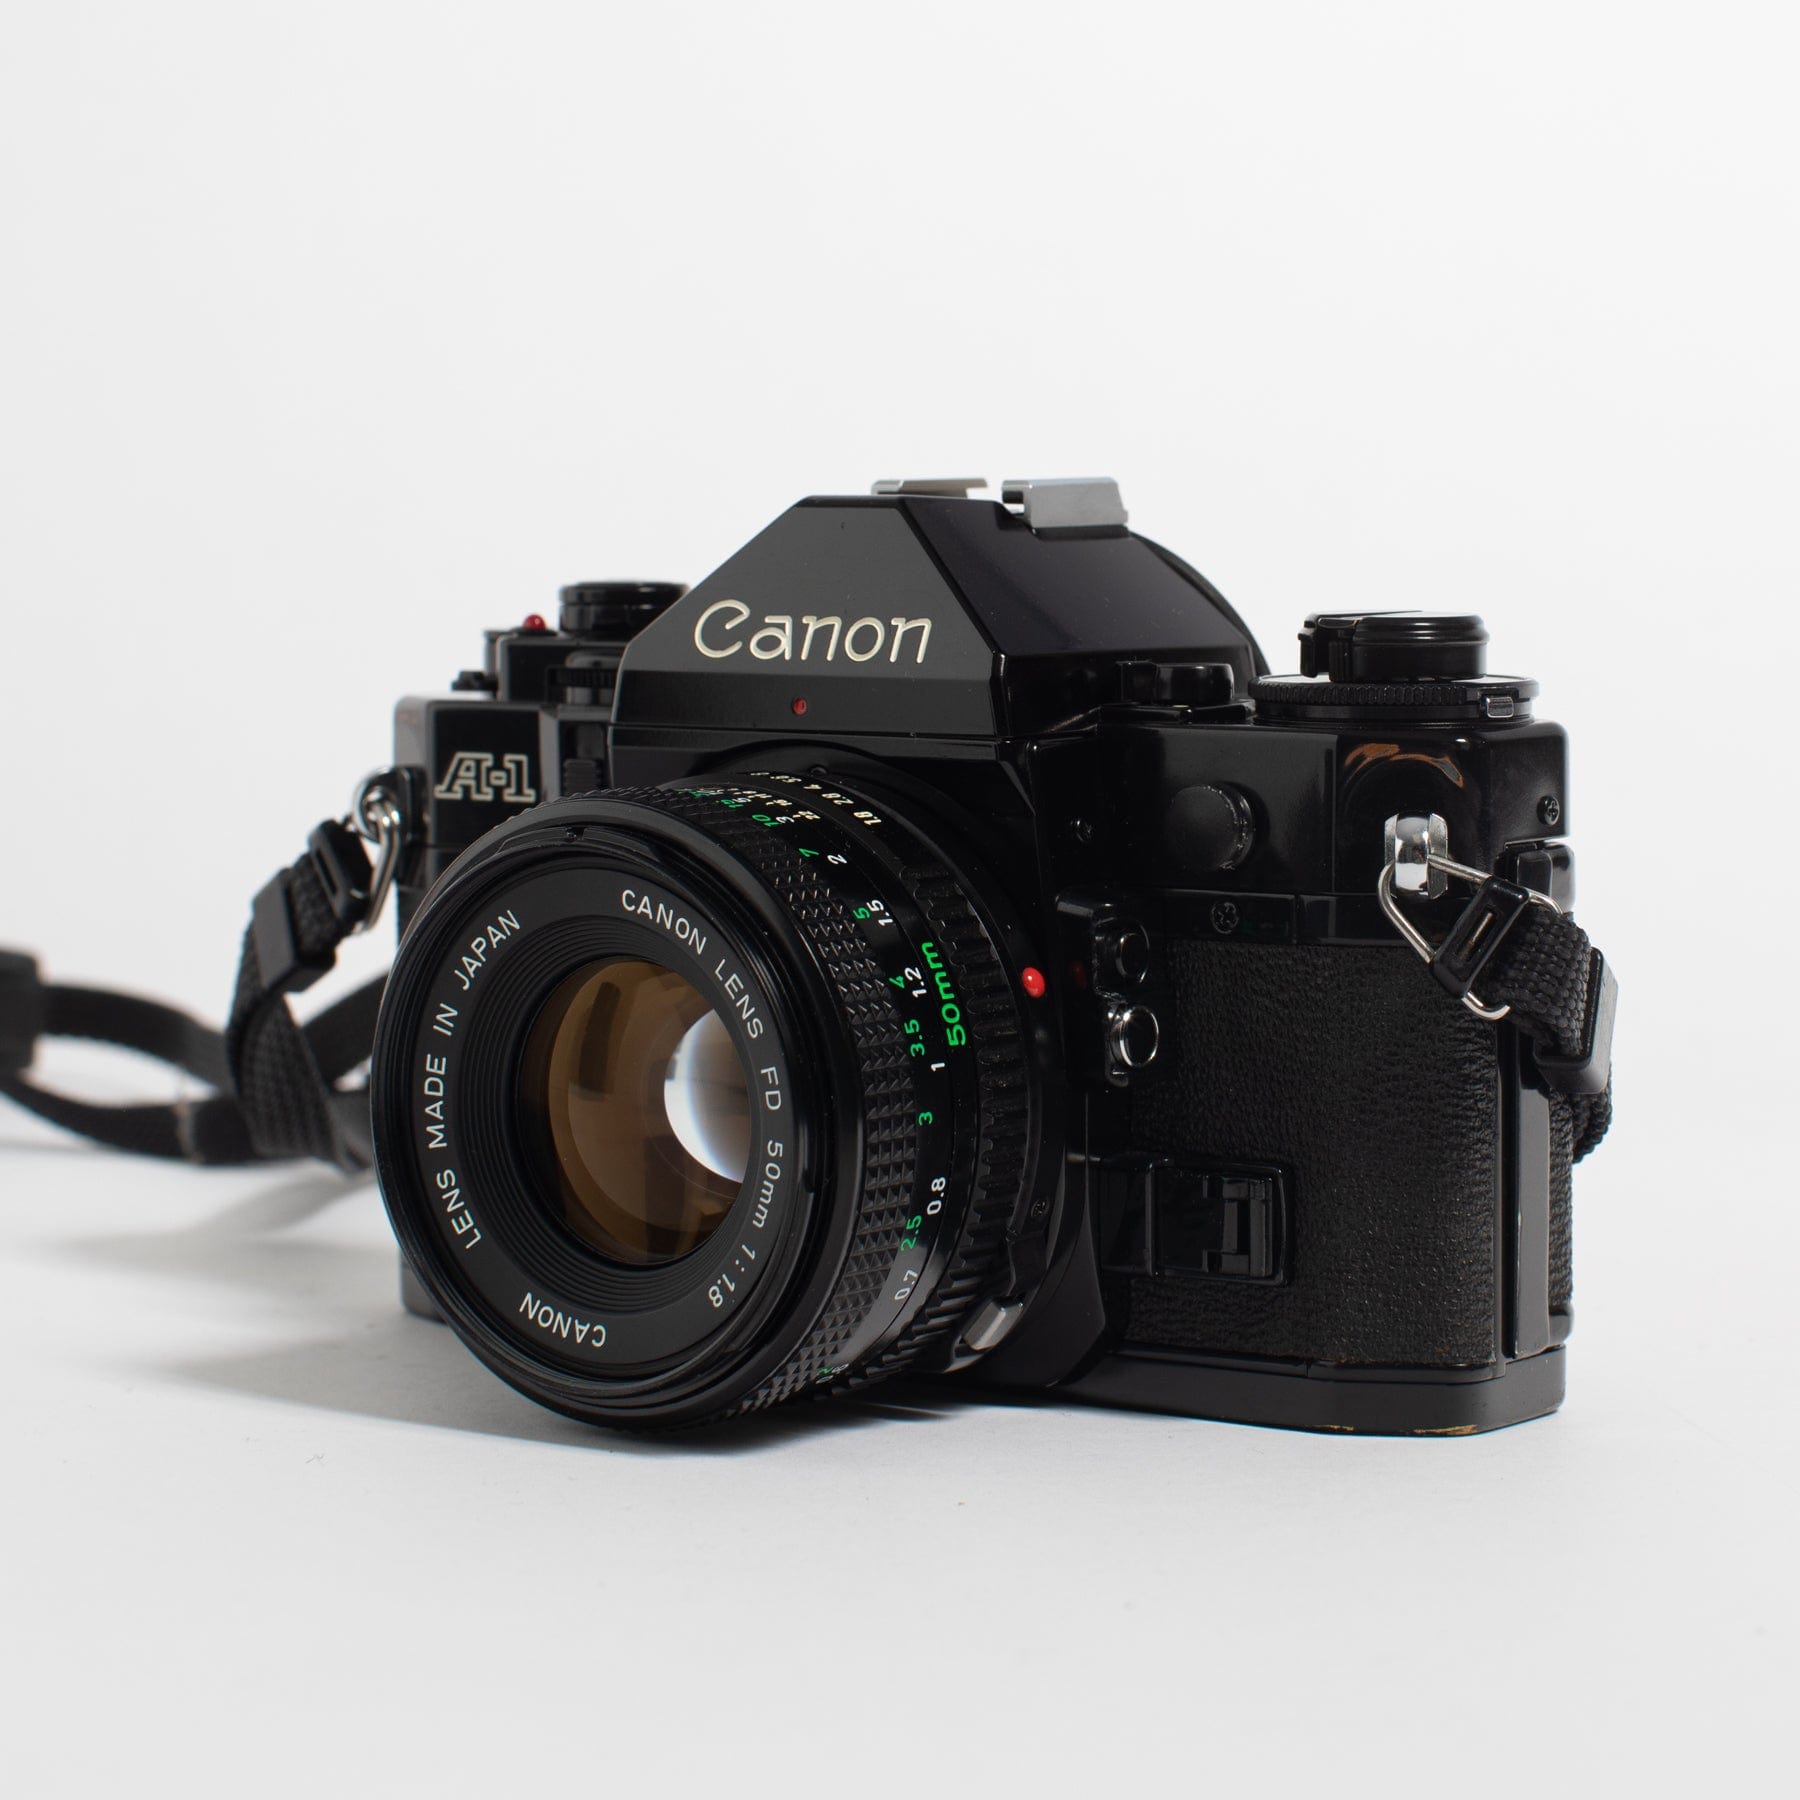 Canon A-1 with FD 50mm f/1.8 Lens -- fresh CLA – Film Supply Club